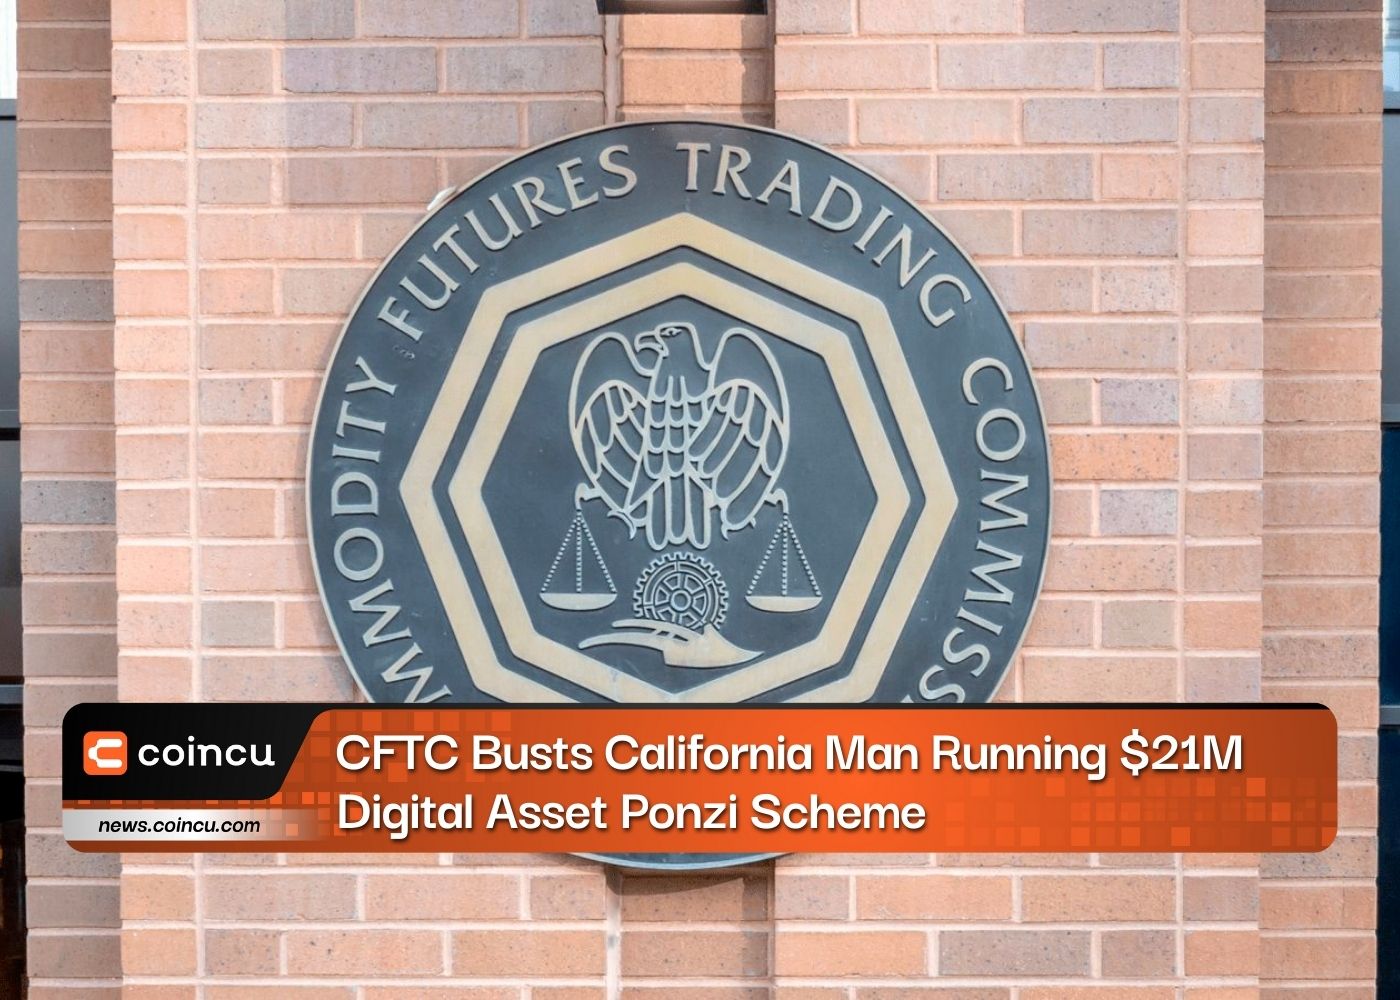 CFTC, 21만 달러 디지털 자산 폰지 계획을 운영하는 캘리포니아 남성 체포